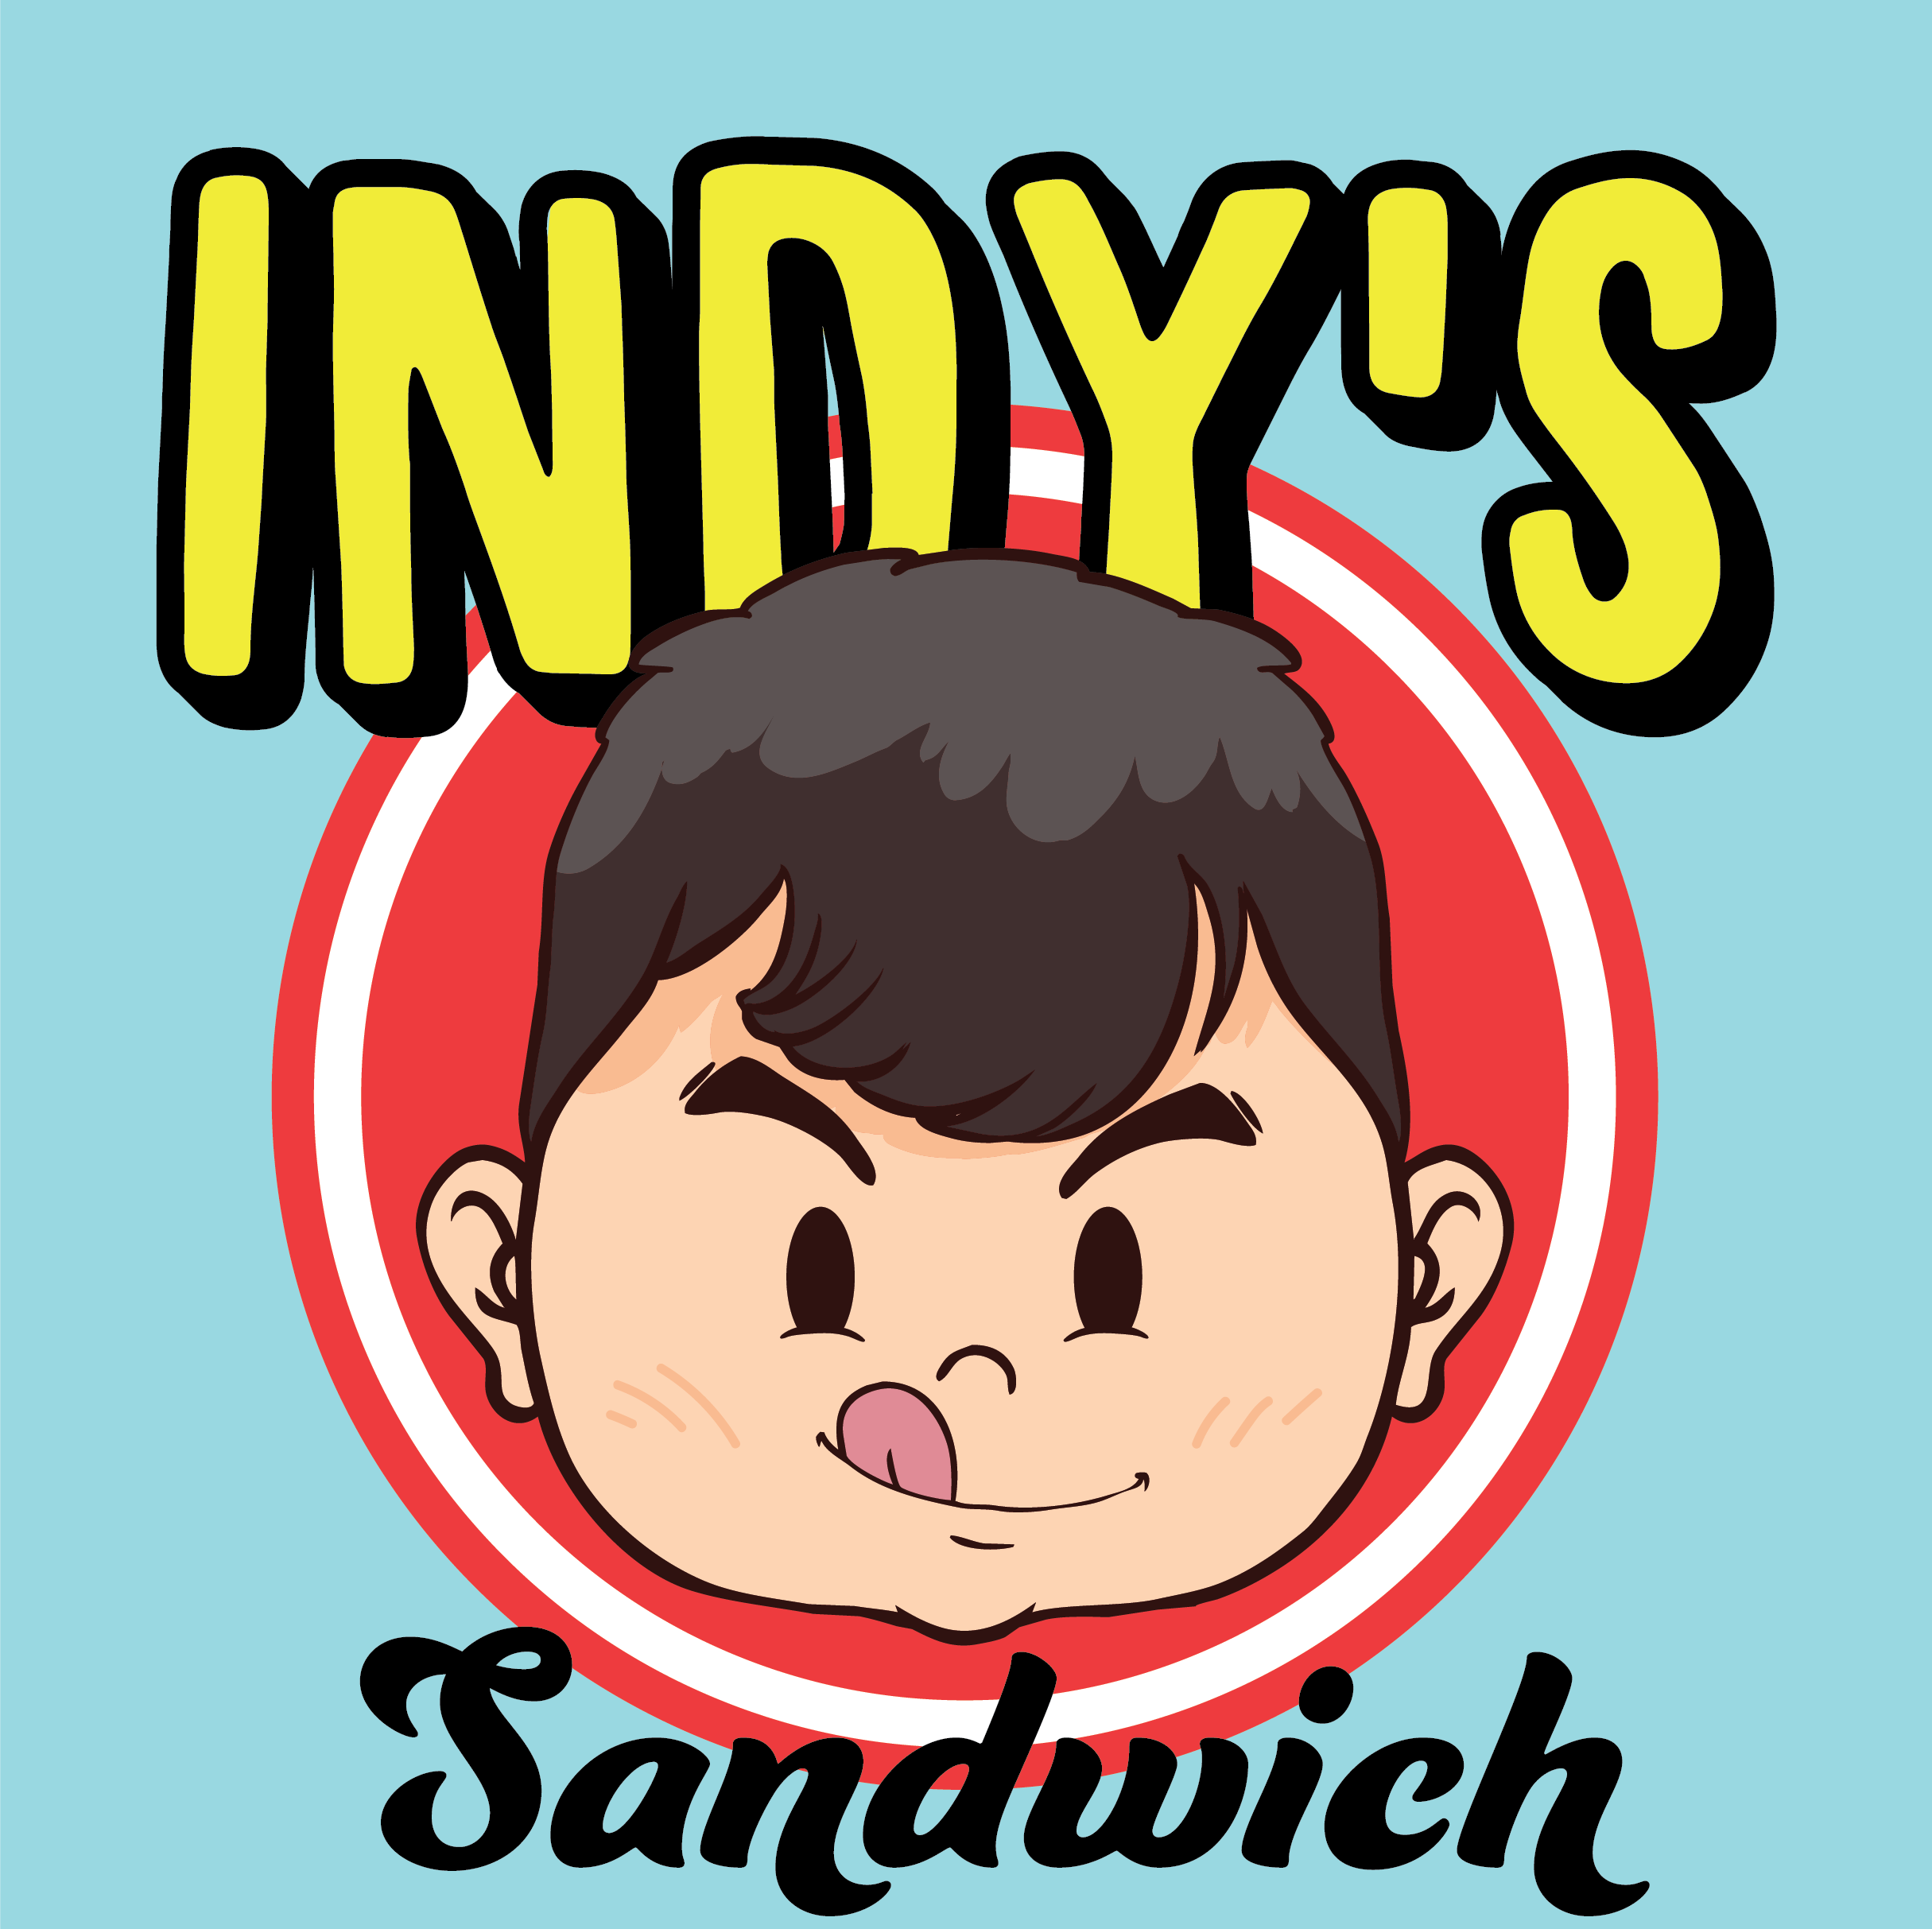 Indy's Sandwich 744 Main Street